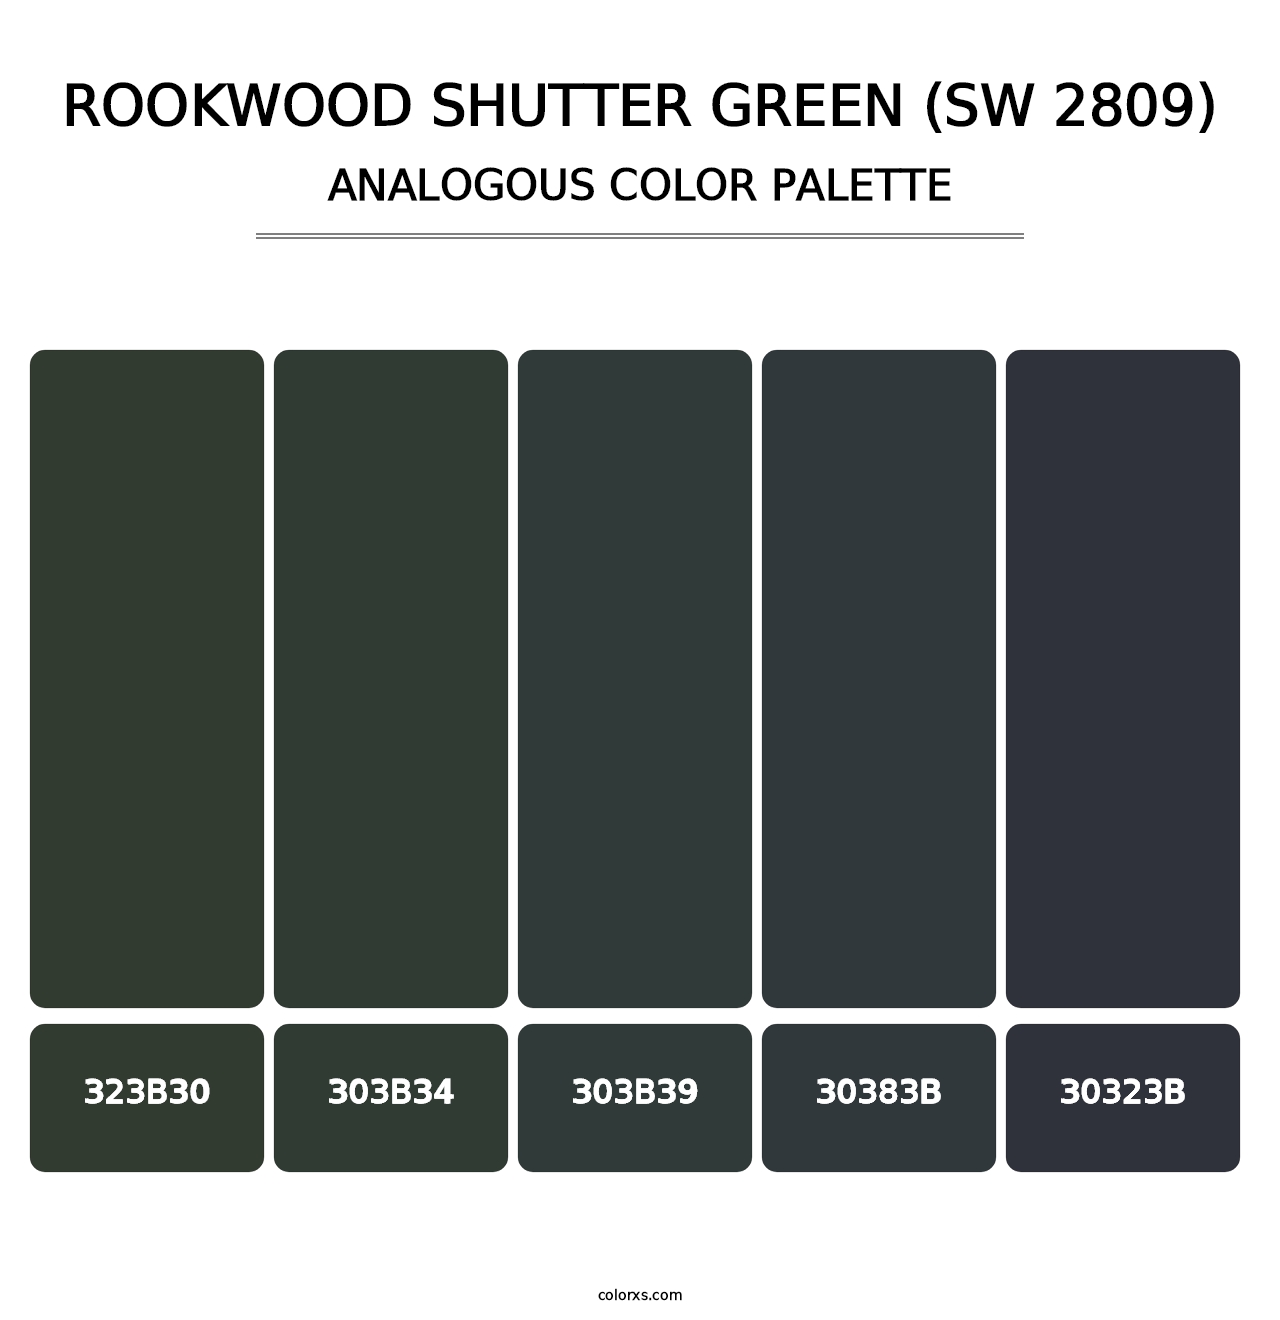 Rookwood Shutter Green (SW 2809) - Analogous Color Palette